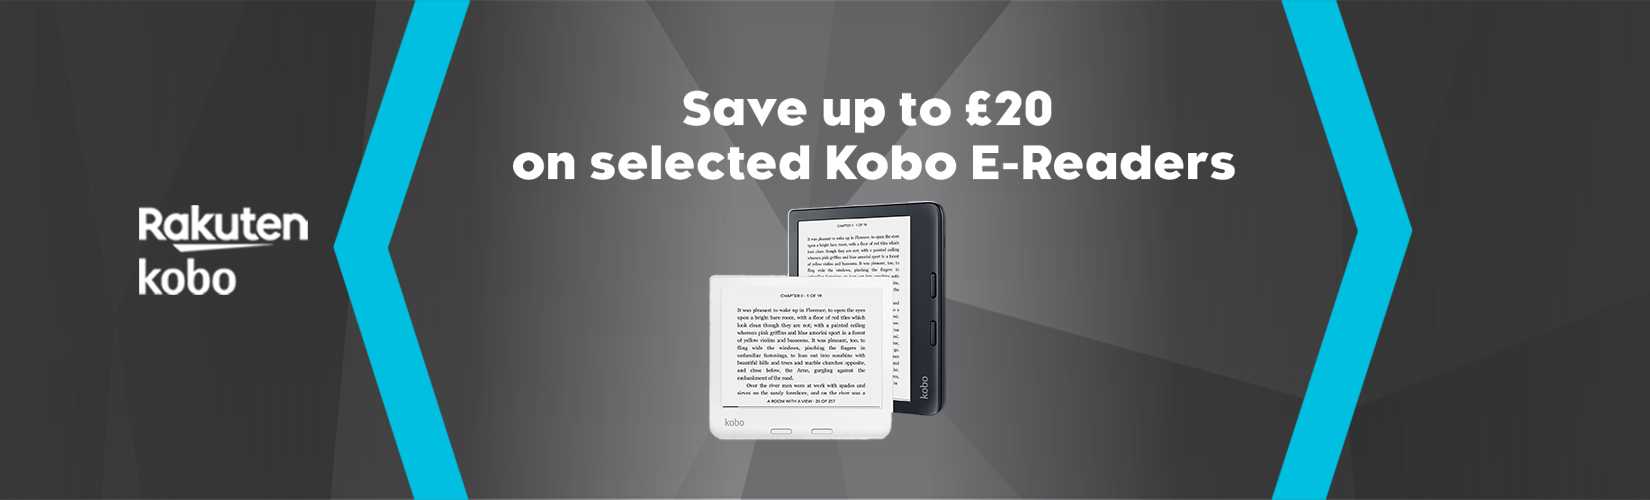 Kobo. Save up to £20 on selected Kobo E-Readers.